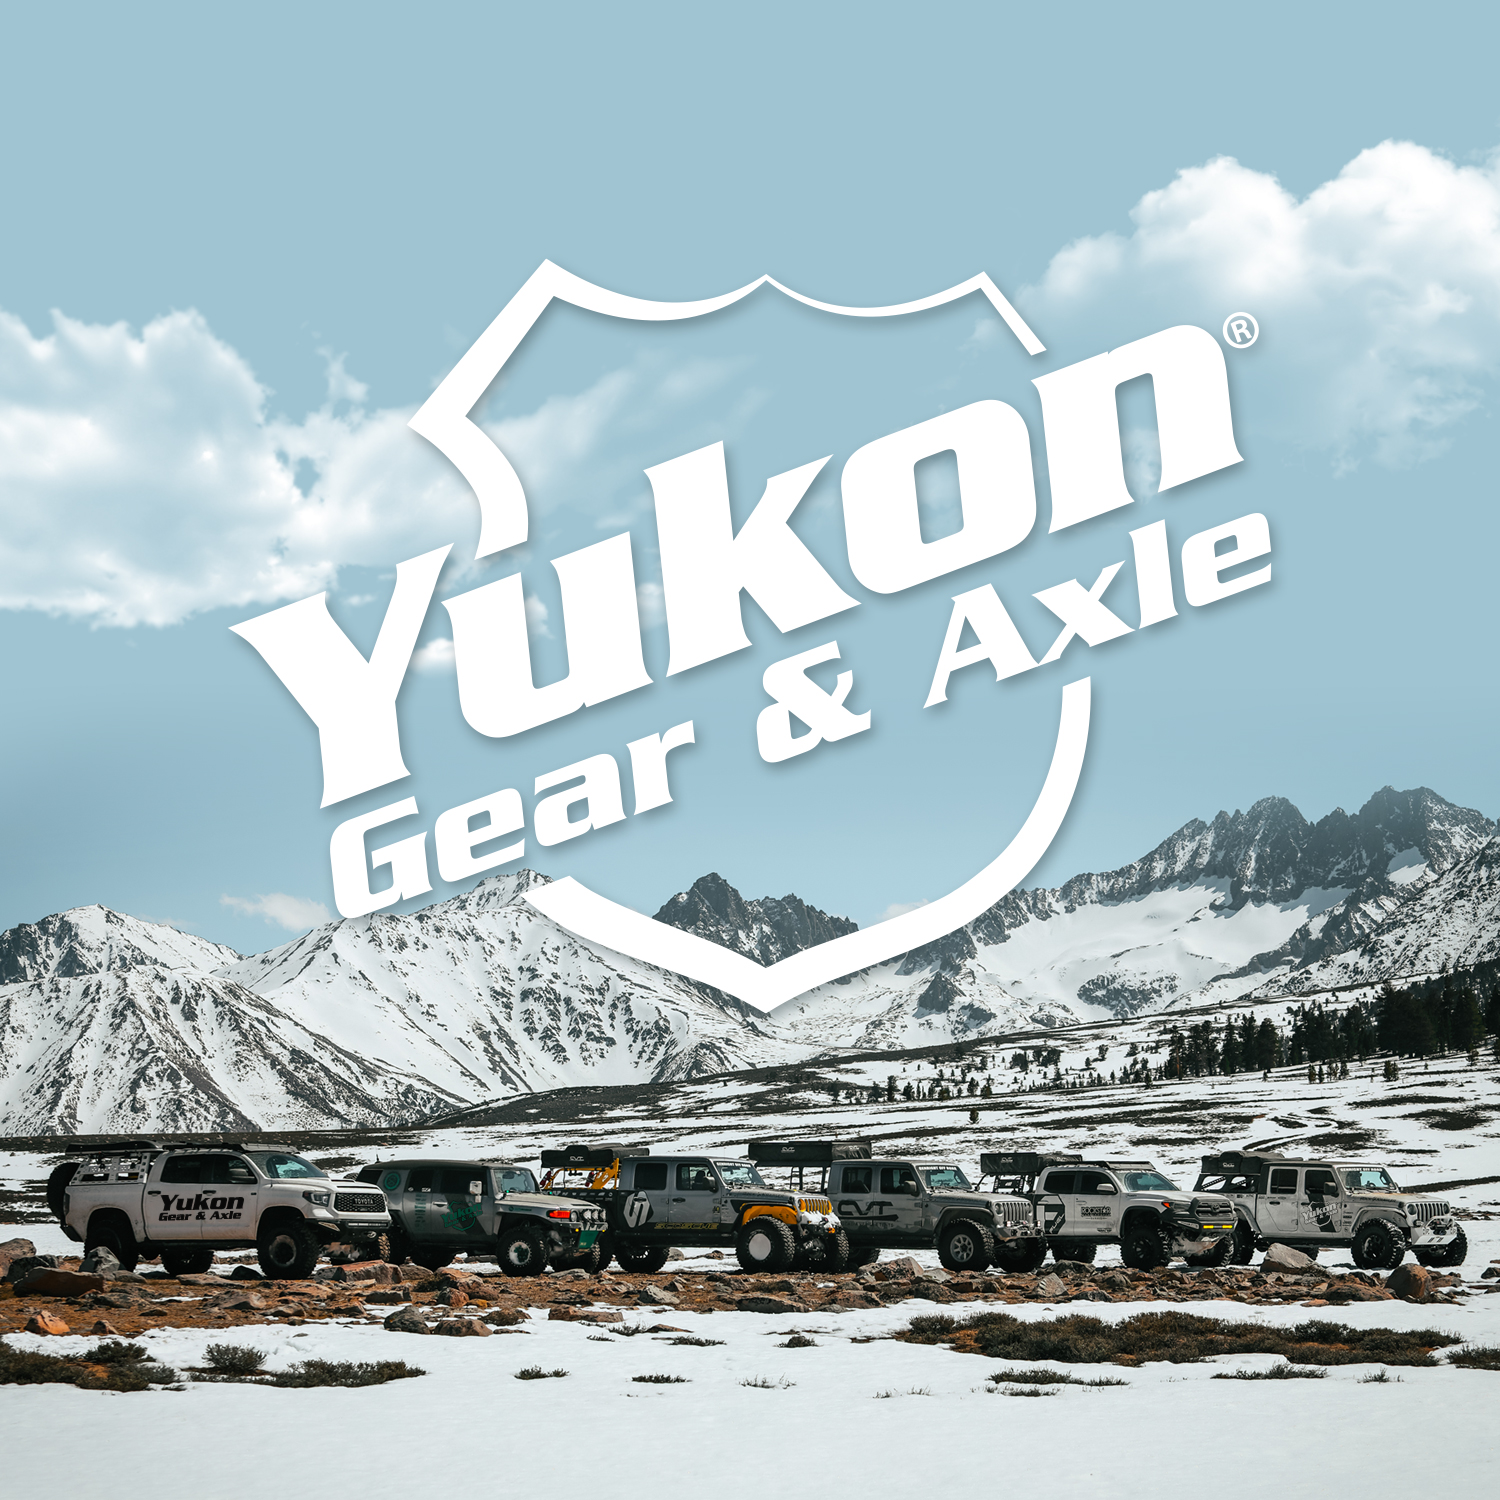 Yukon Muscle Car Re-Gear Kit for GM 8.5” Olds diff, 27 spline, 3.73 ratio 